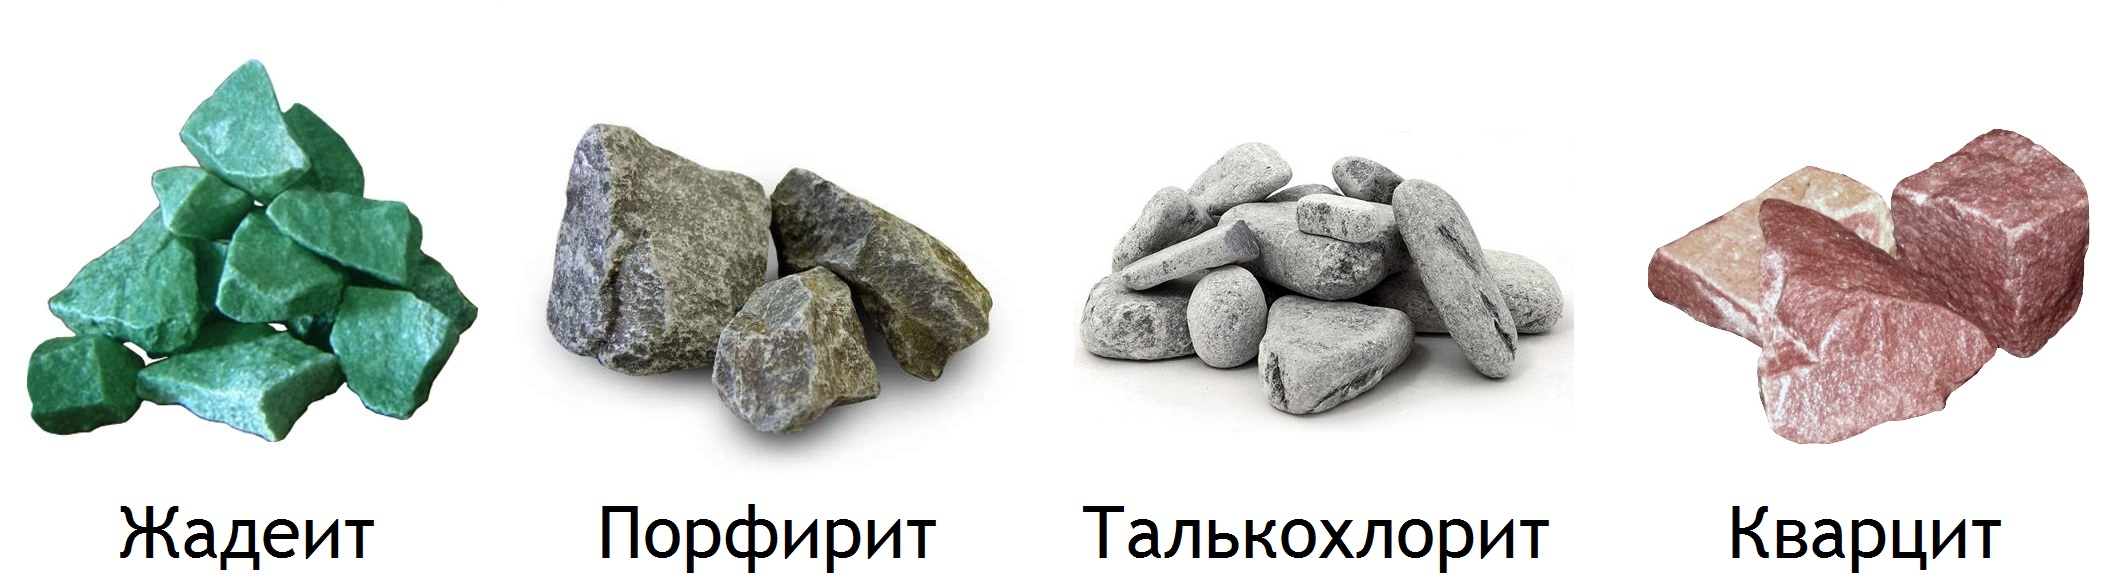 камни для бани